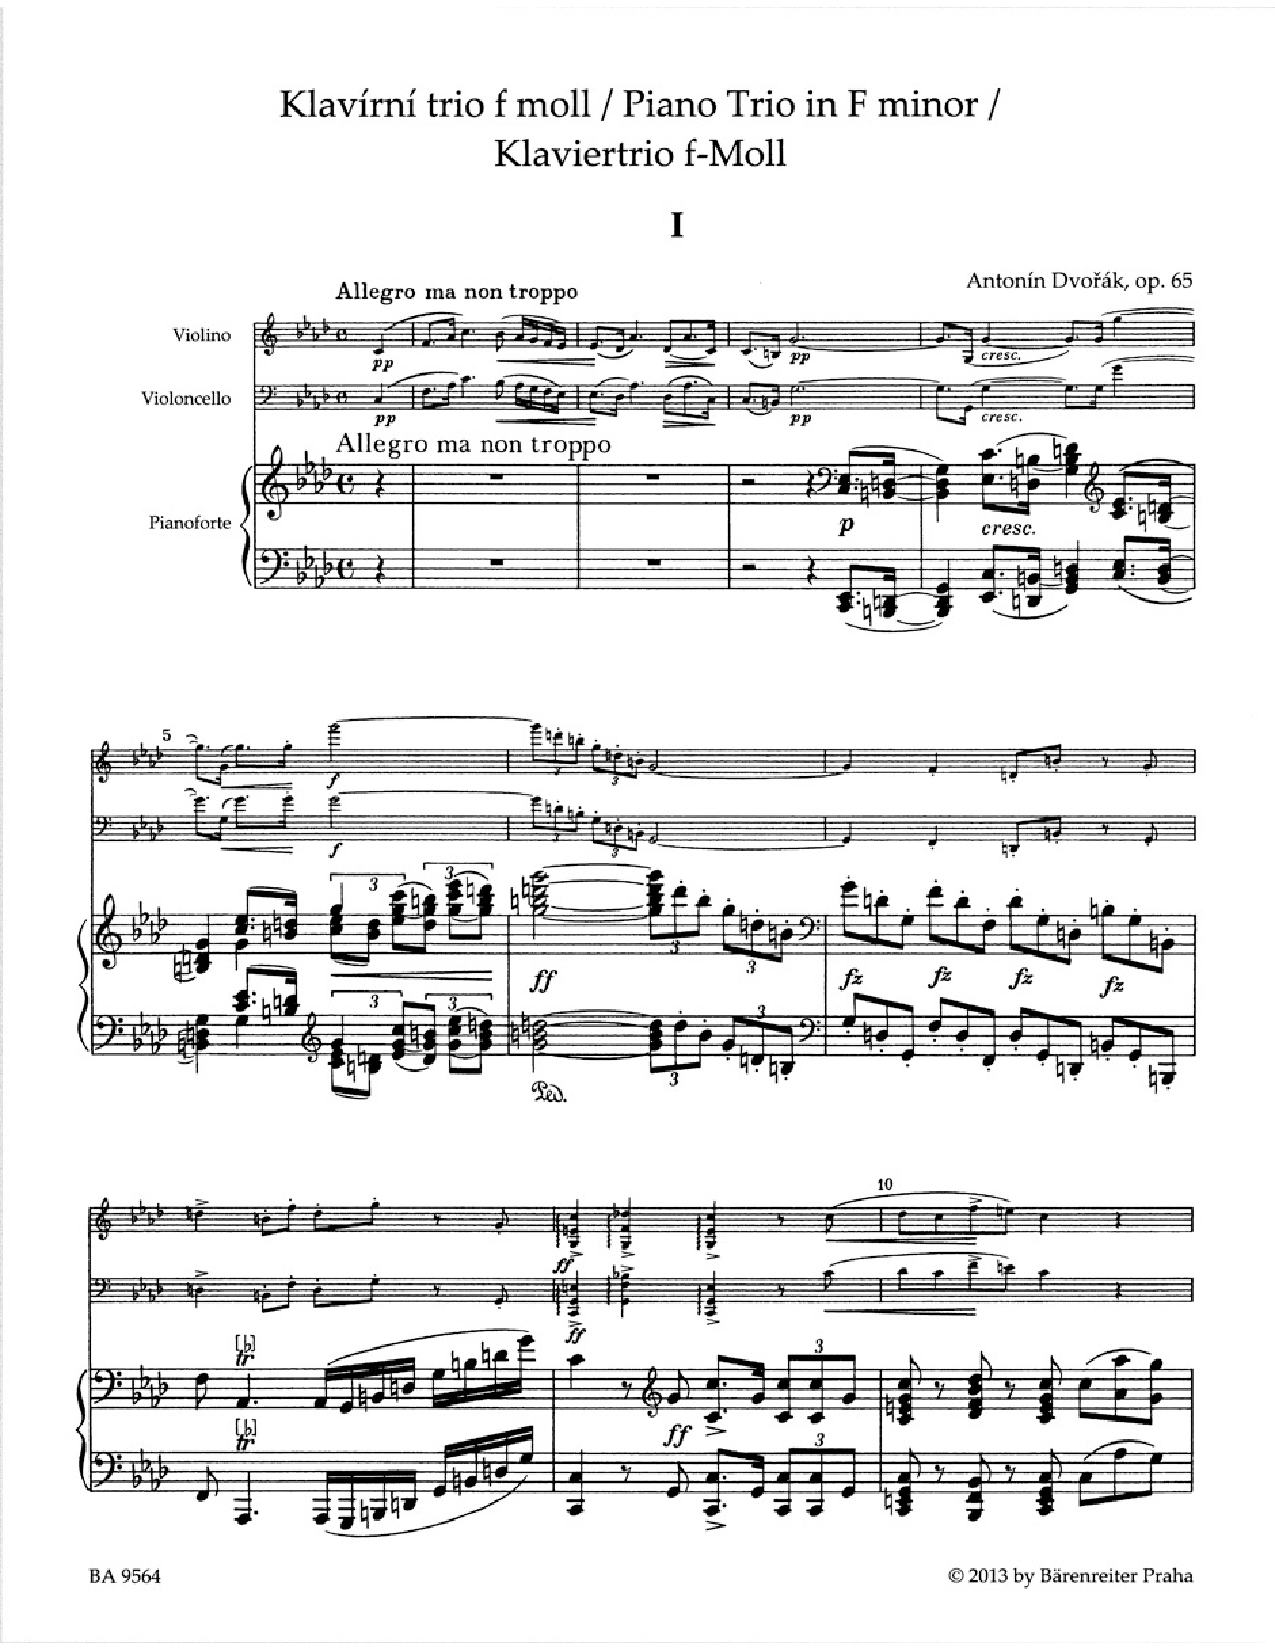 Piano Trio in F minor Op 65 Score and Parts